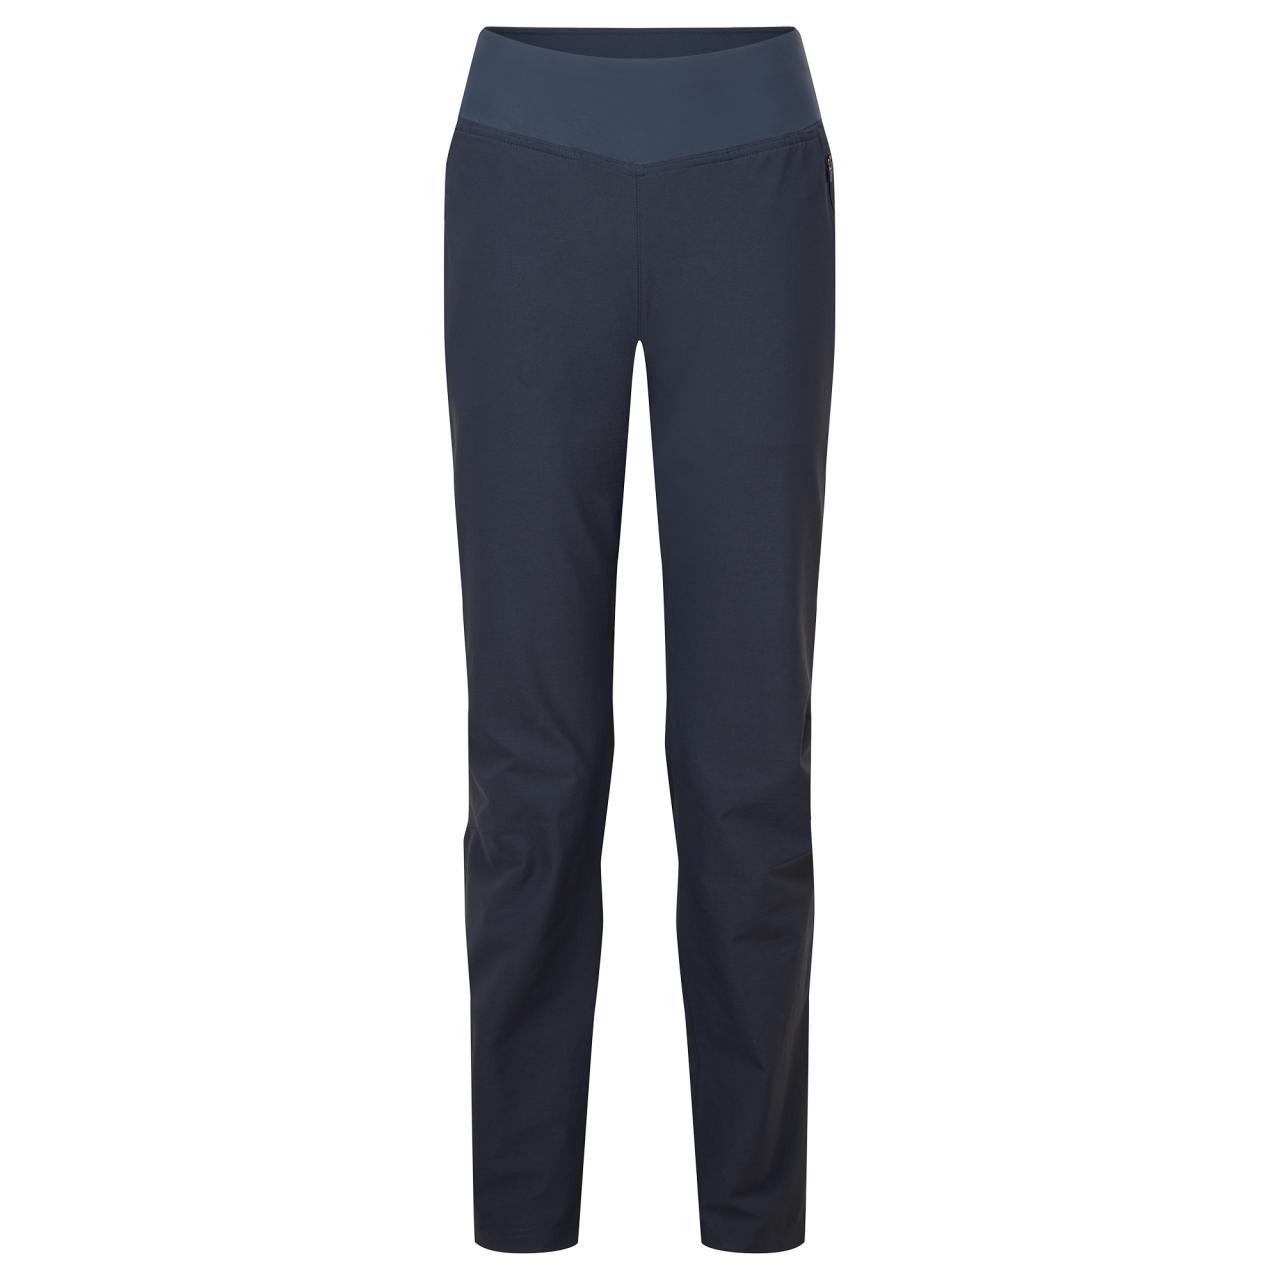 FEM TUCANA PANTS REG LEG-ECLIPSE BLUE-UK10/S dámské kalhoty modré